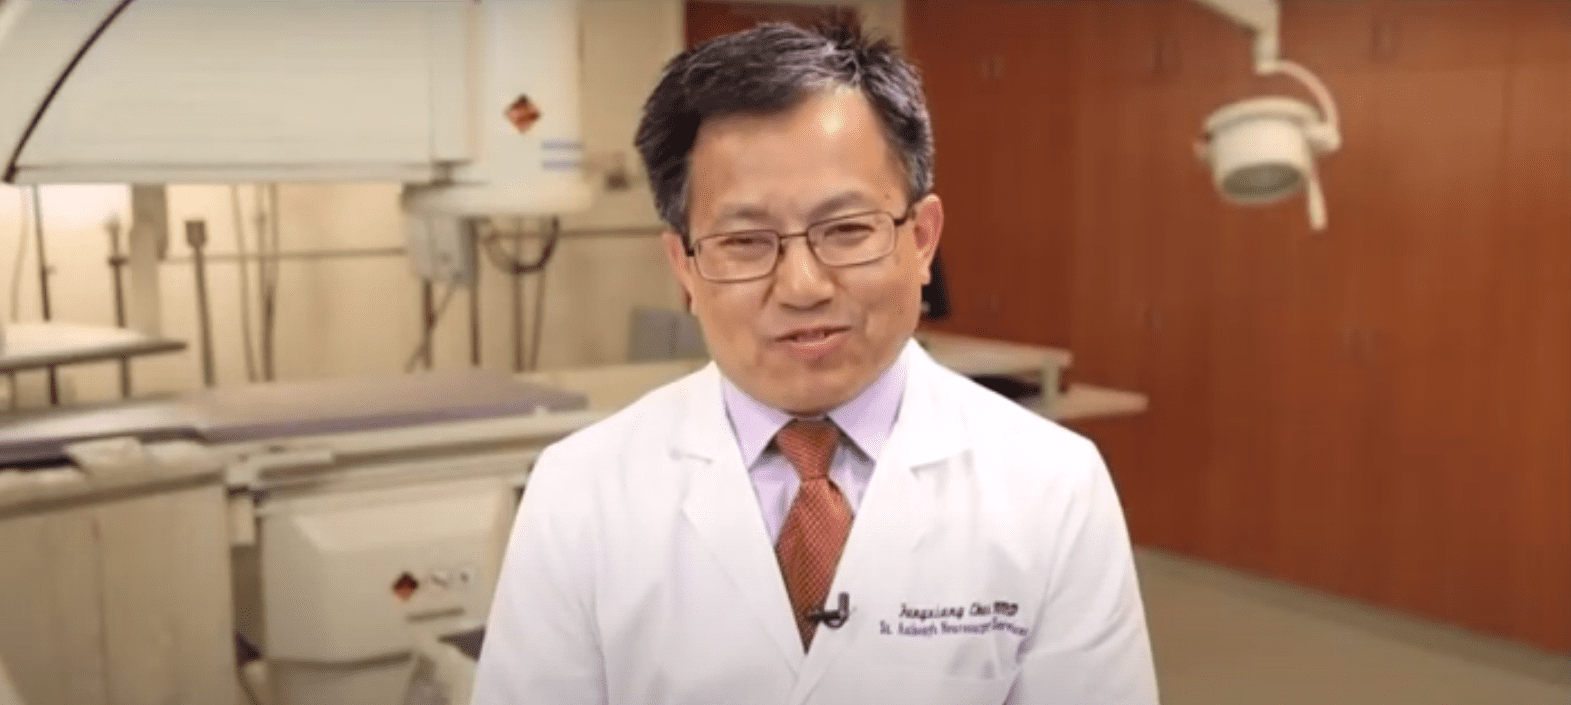 Dr. Fangxiang Chen en su consultorio en 2016. | Foto:  YouTube/KSDK News